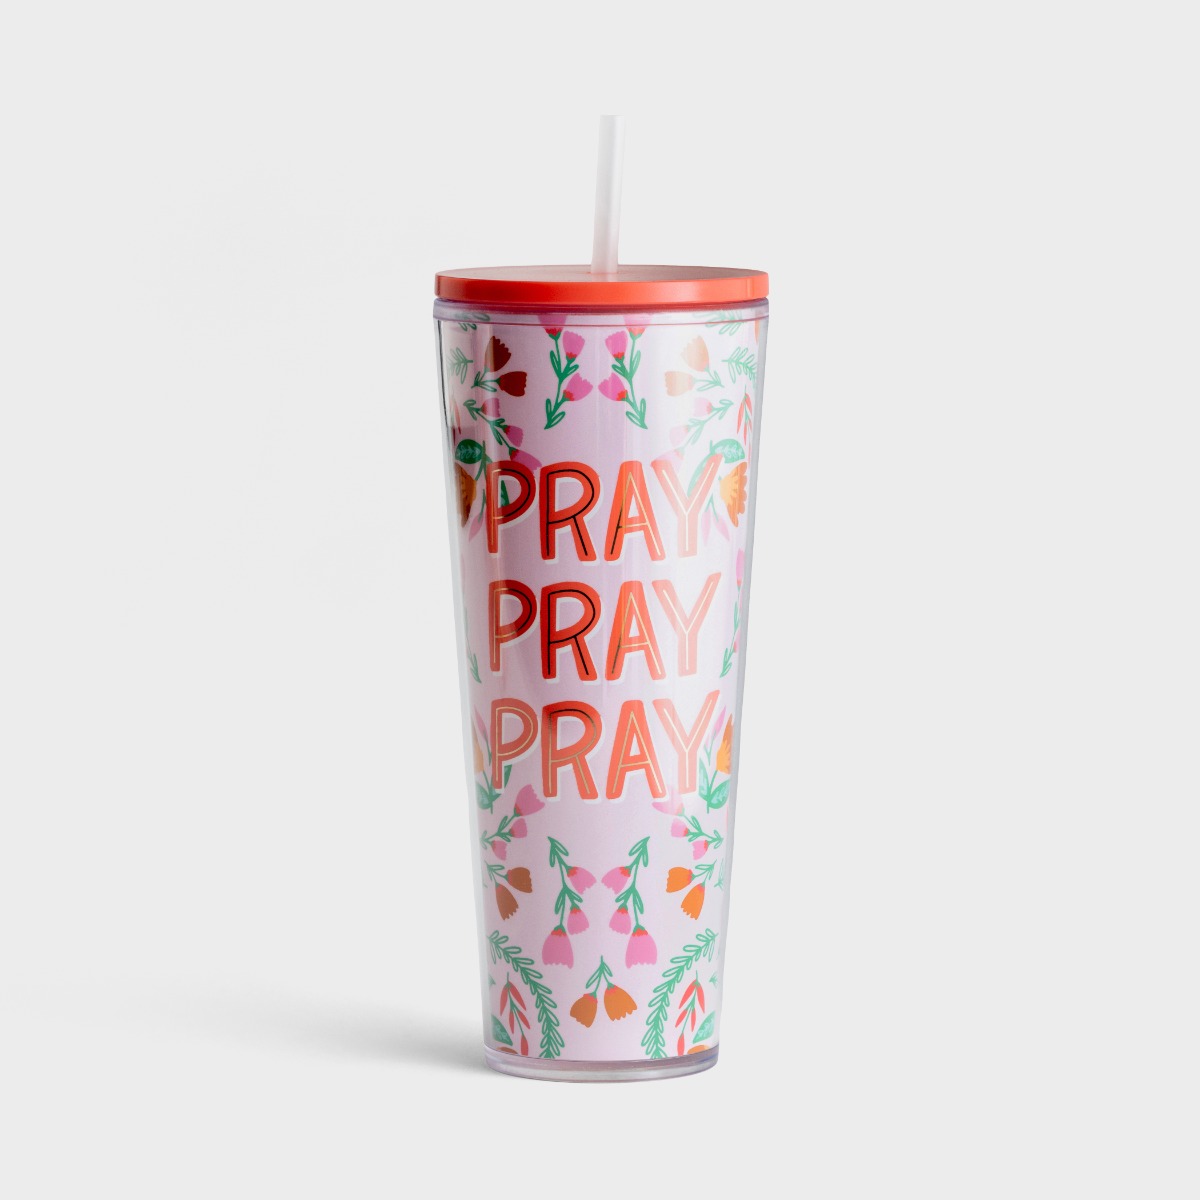 Pray Pray Pray - Straw Tumbler